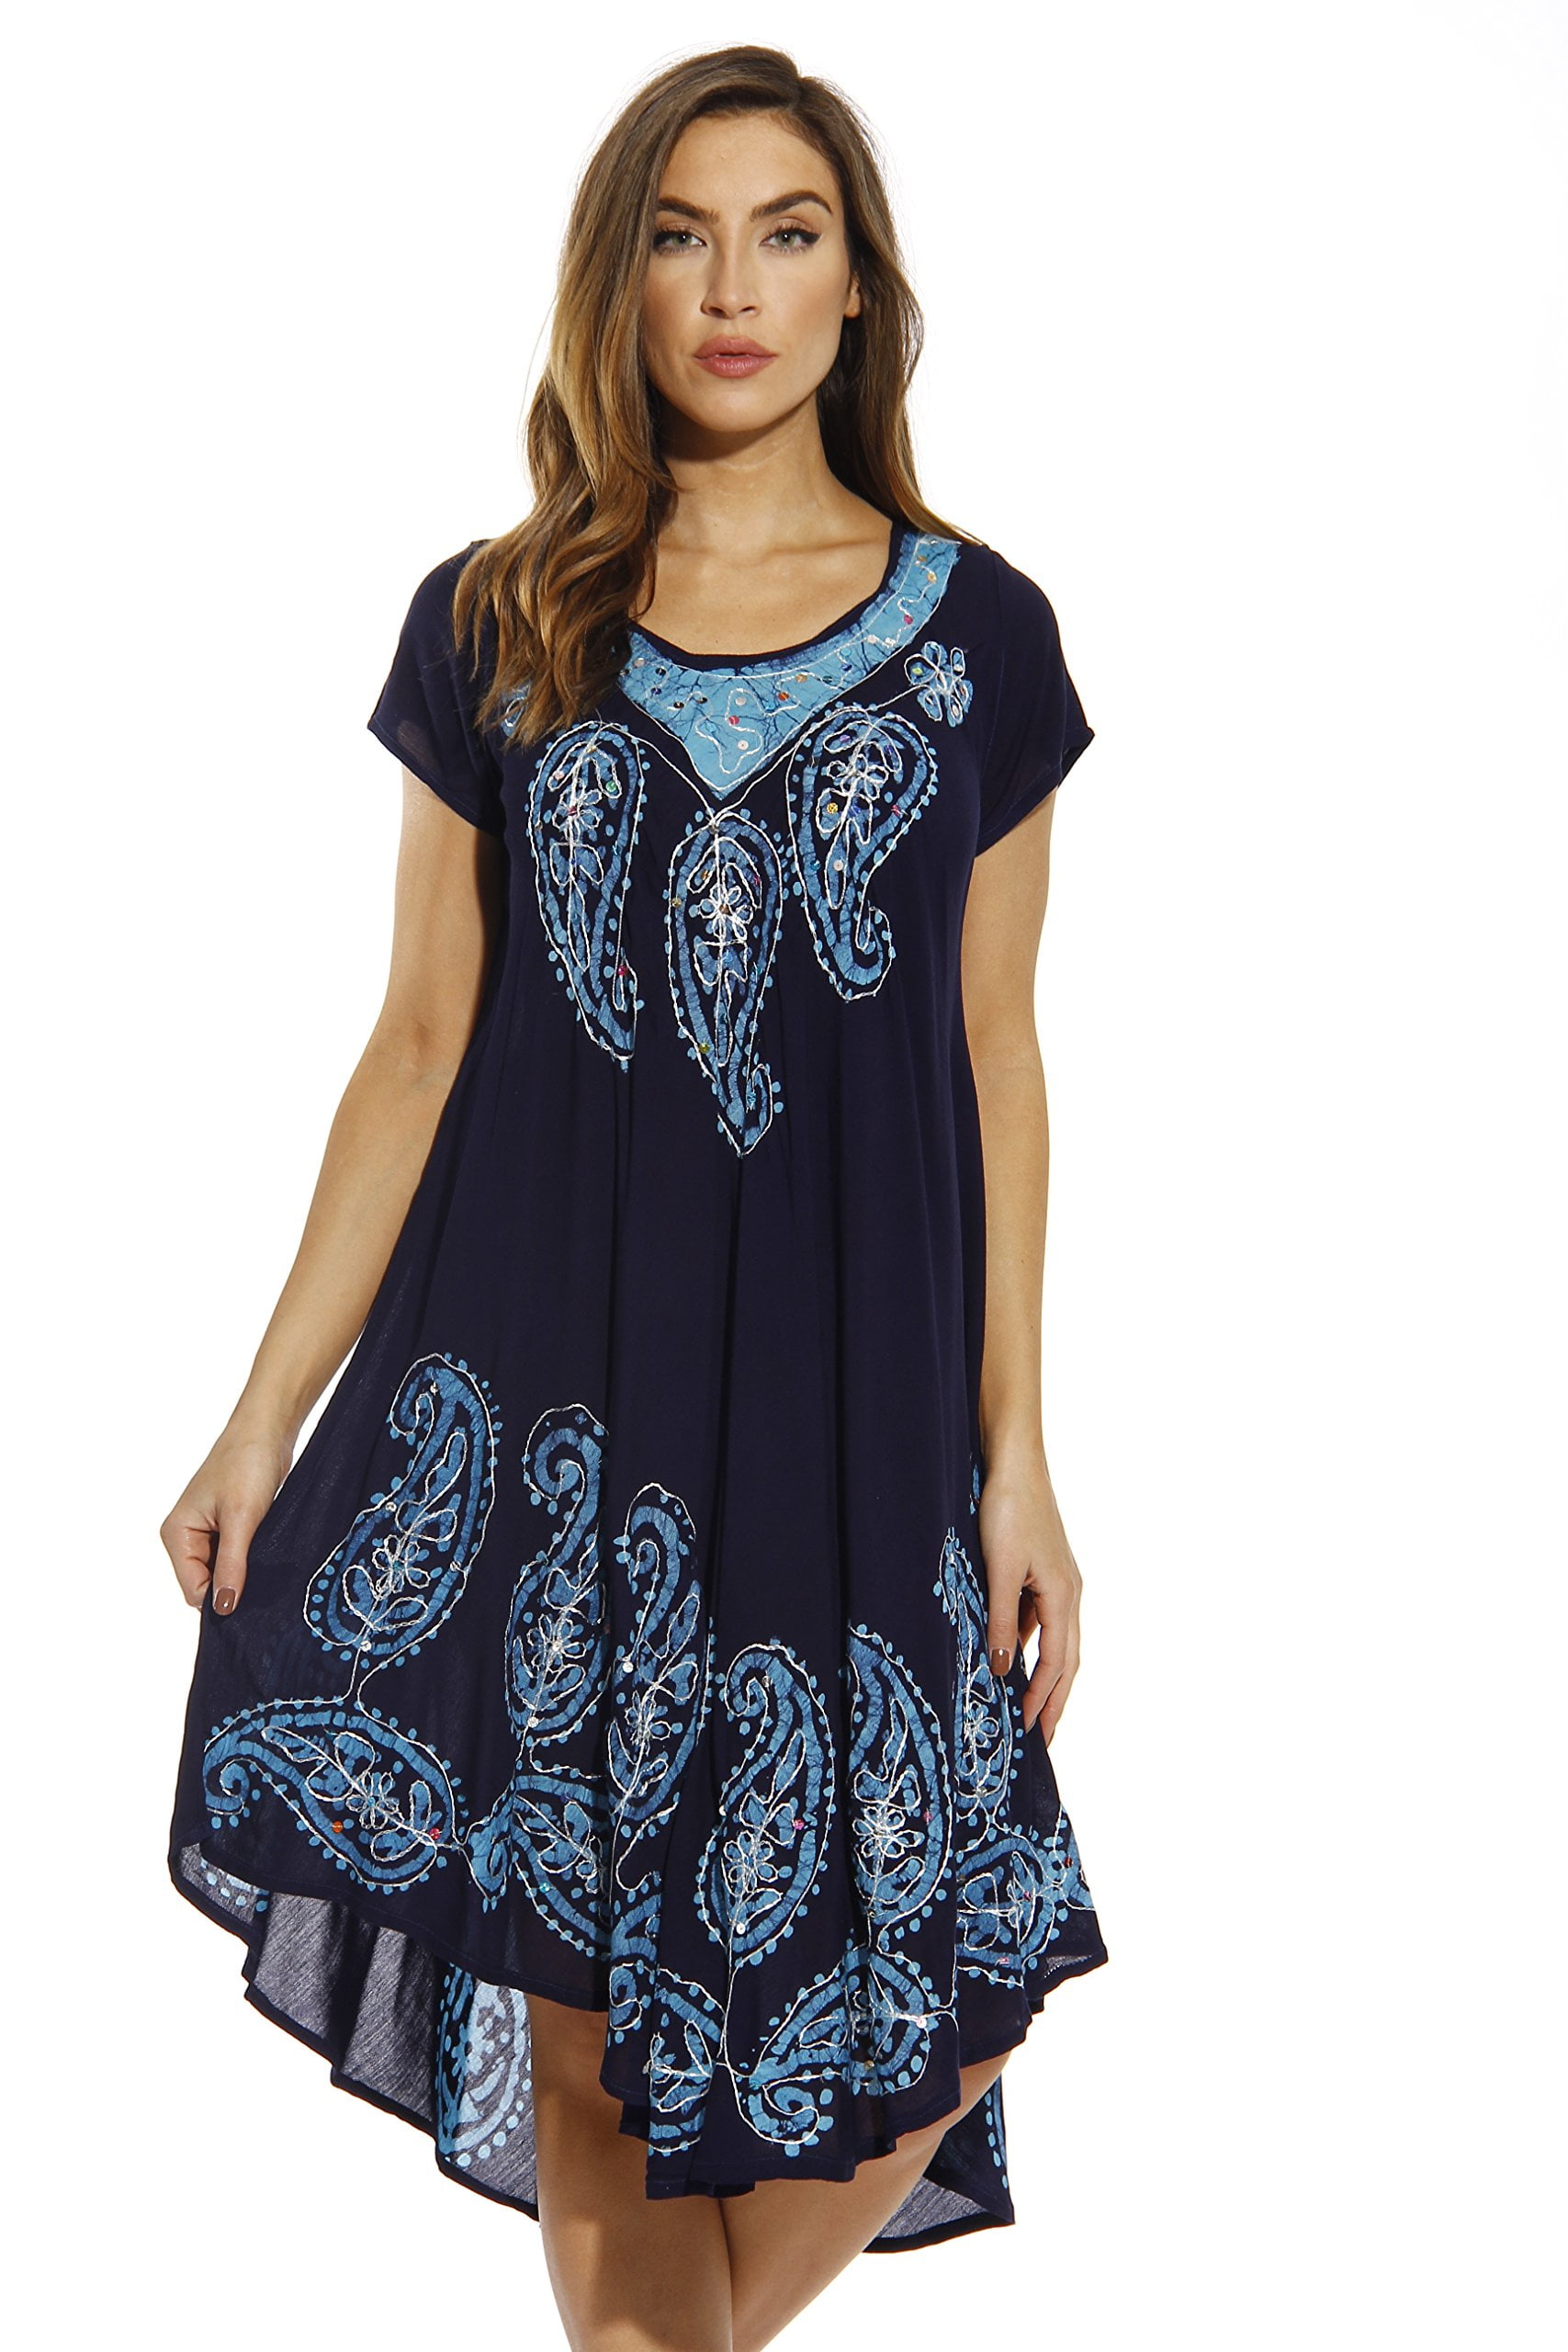 Riviera Sun Dress / Dresses for Women (Navy / Blue, X-large) - Walmart.com